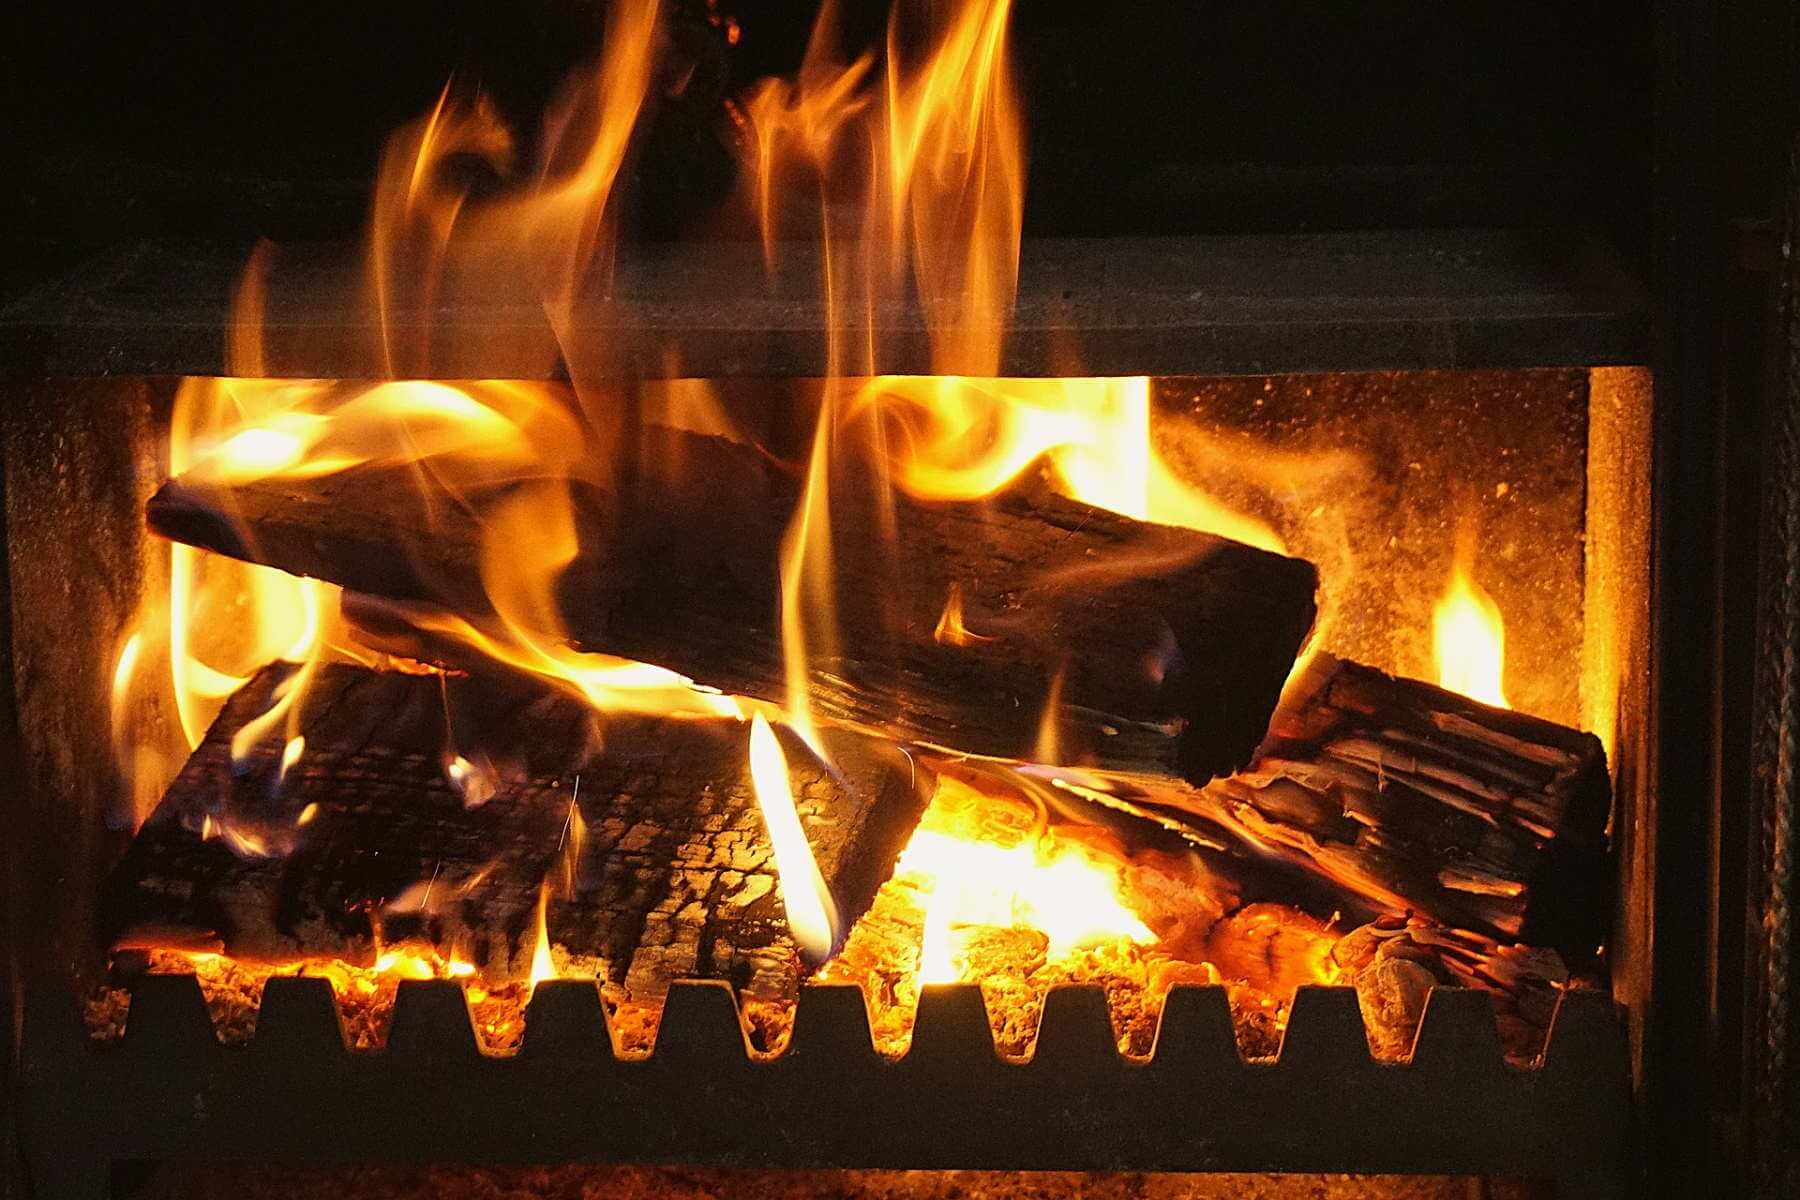 free download fireplace screensaver